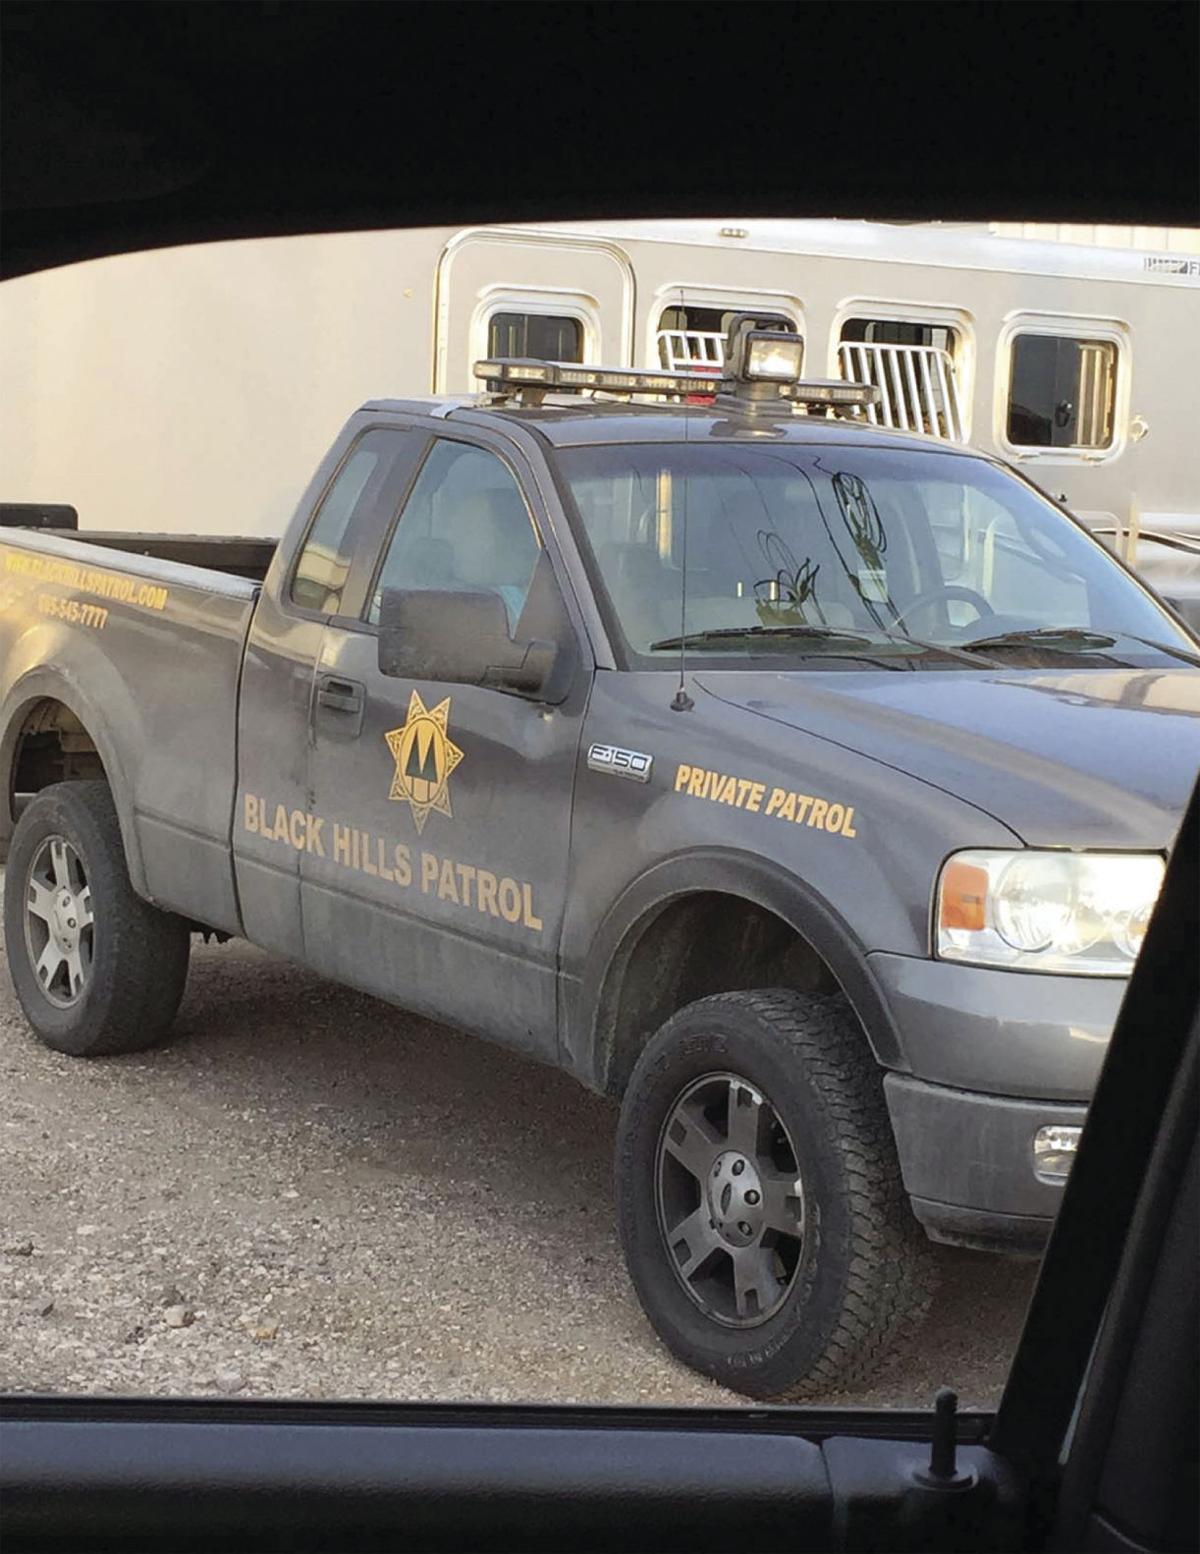 Black Hills Patrol vehicle